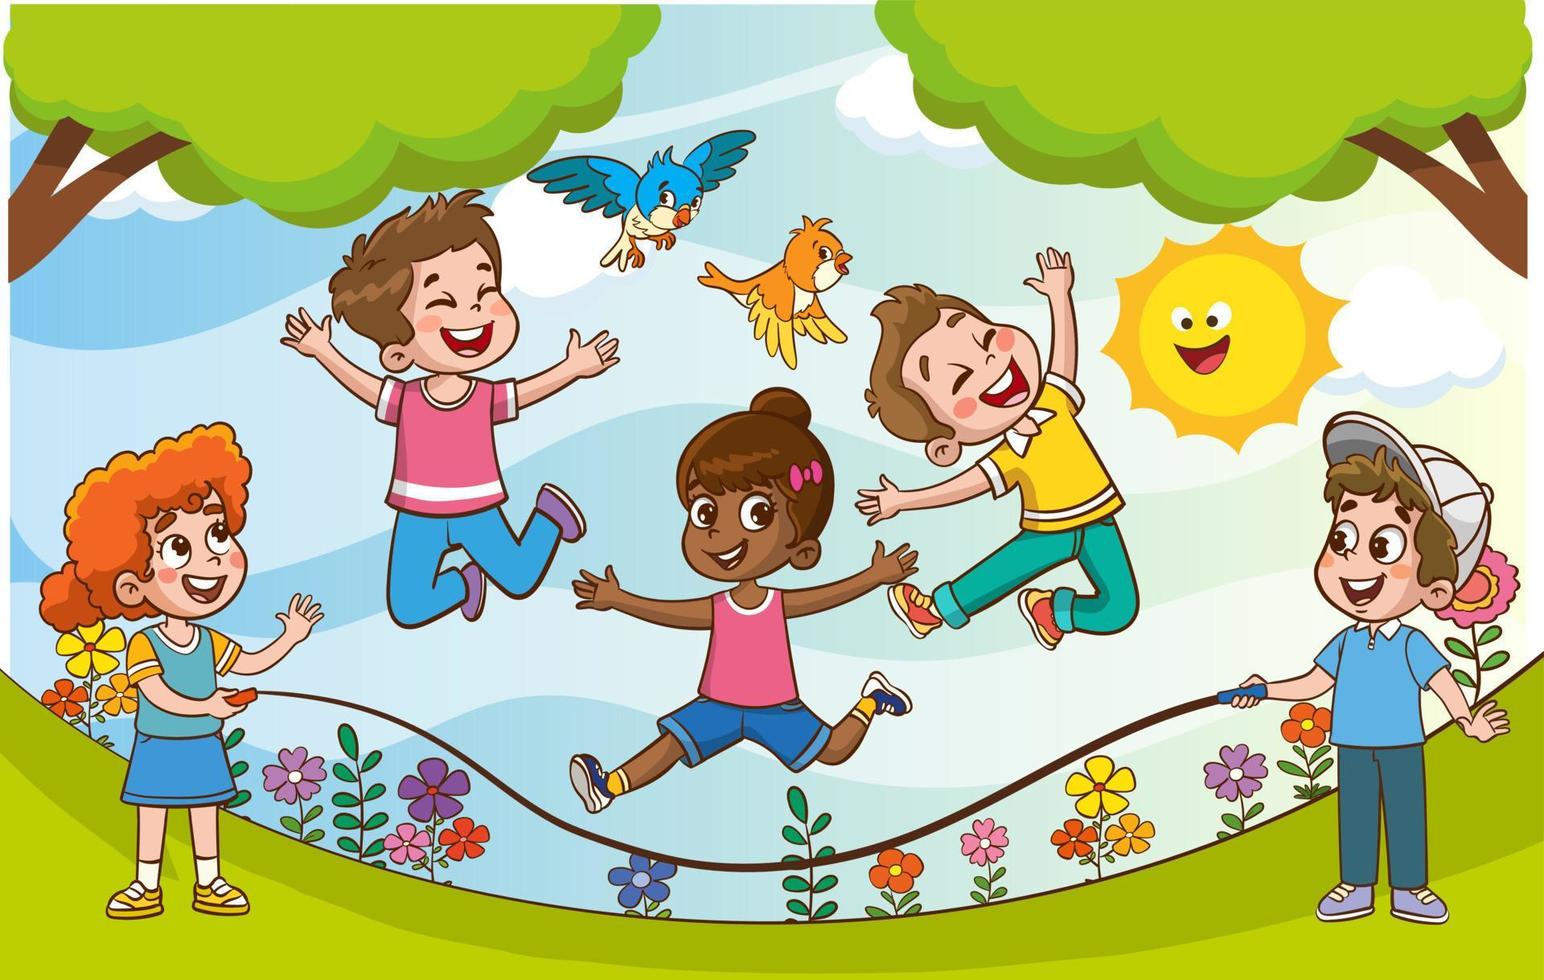 Happy Little Kids Having Fun. vector illustration of cute kids jumping rope